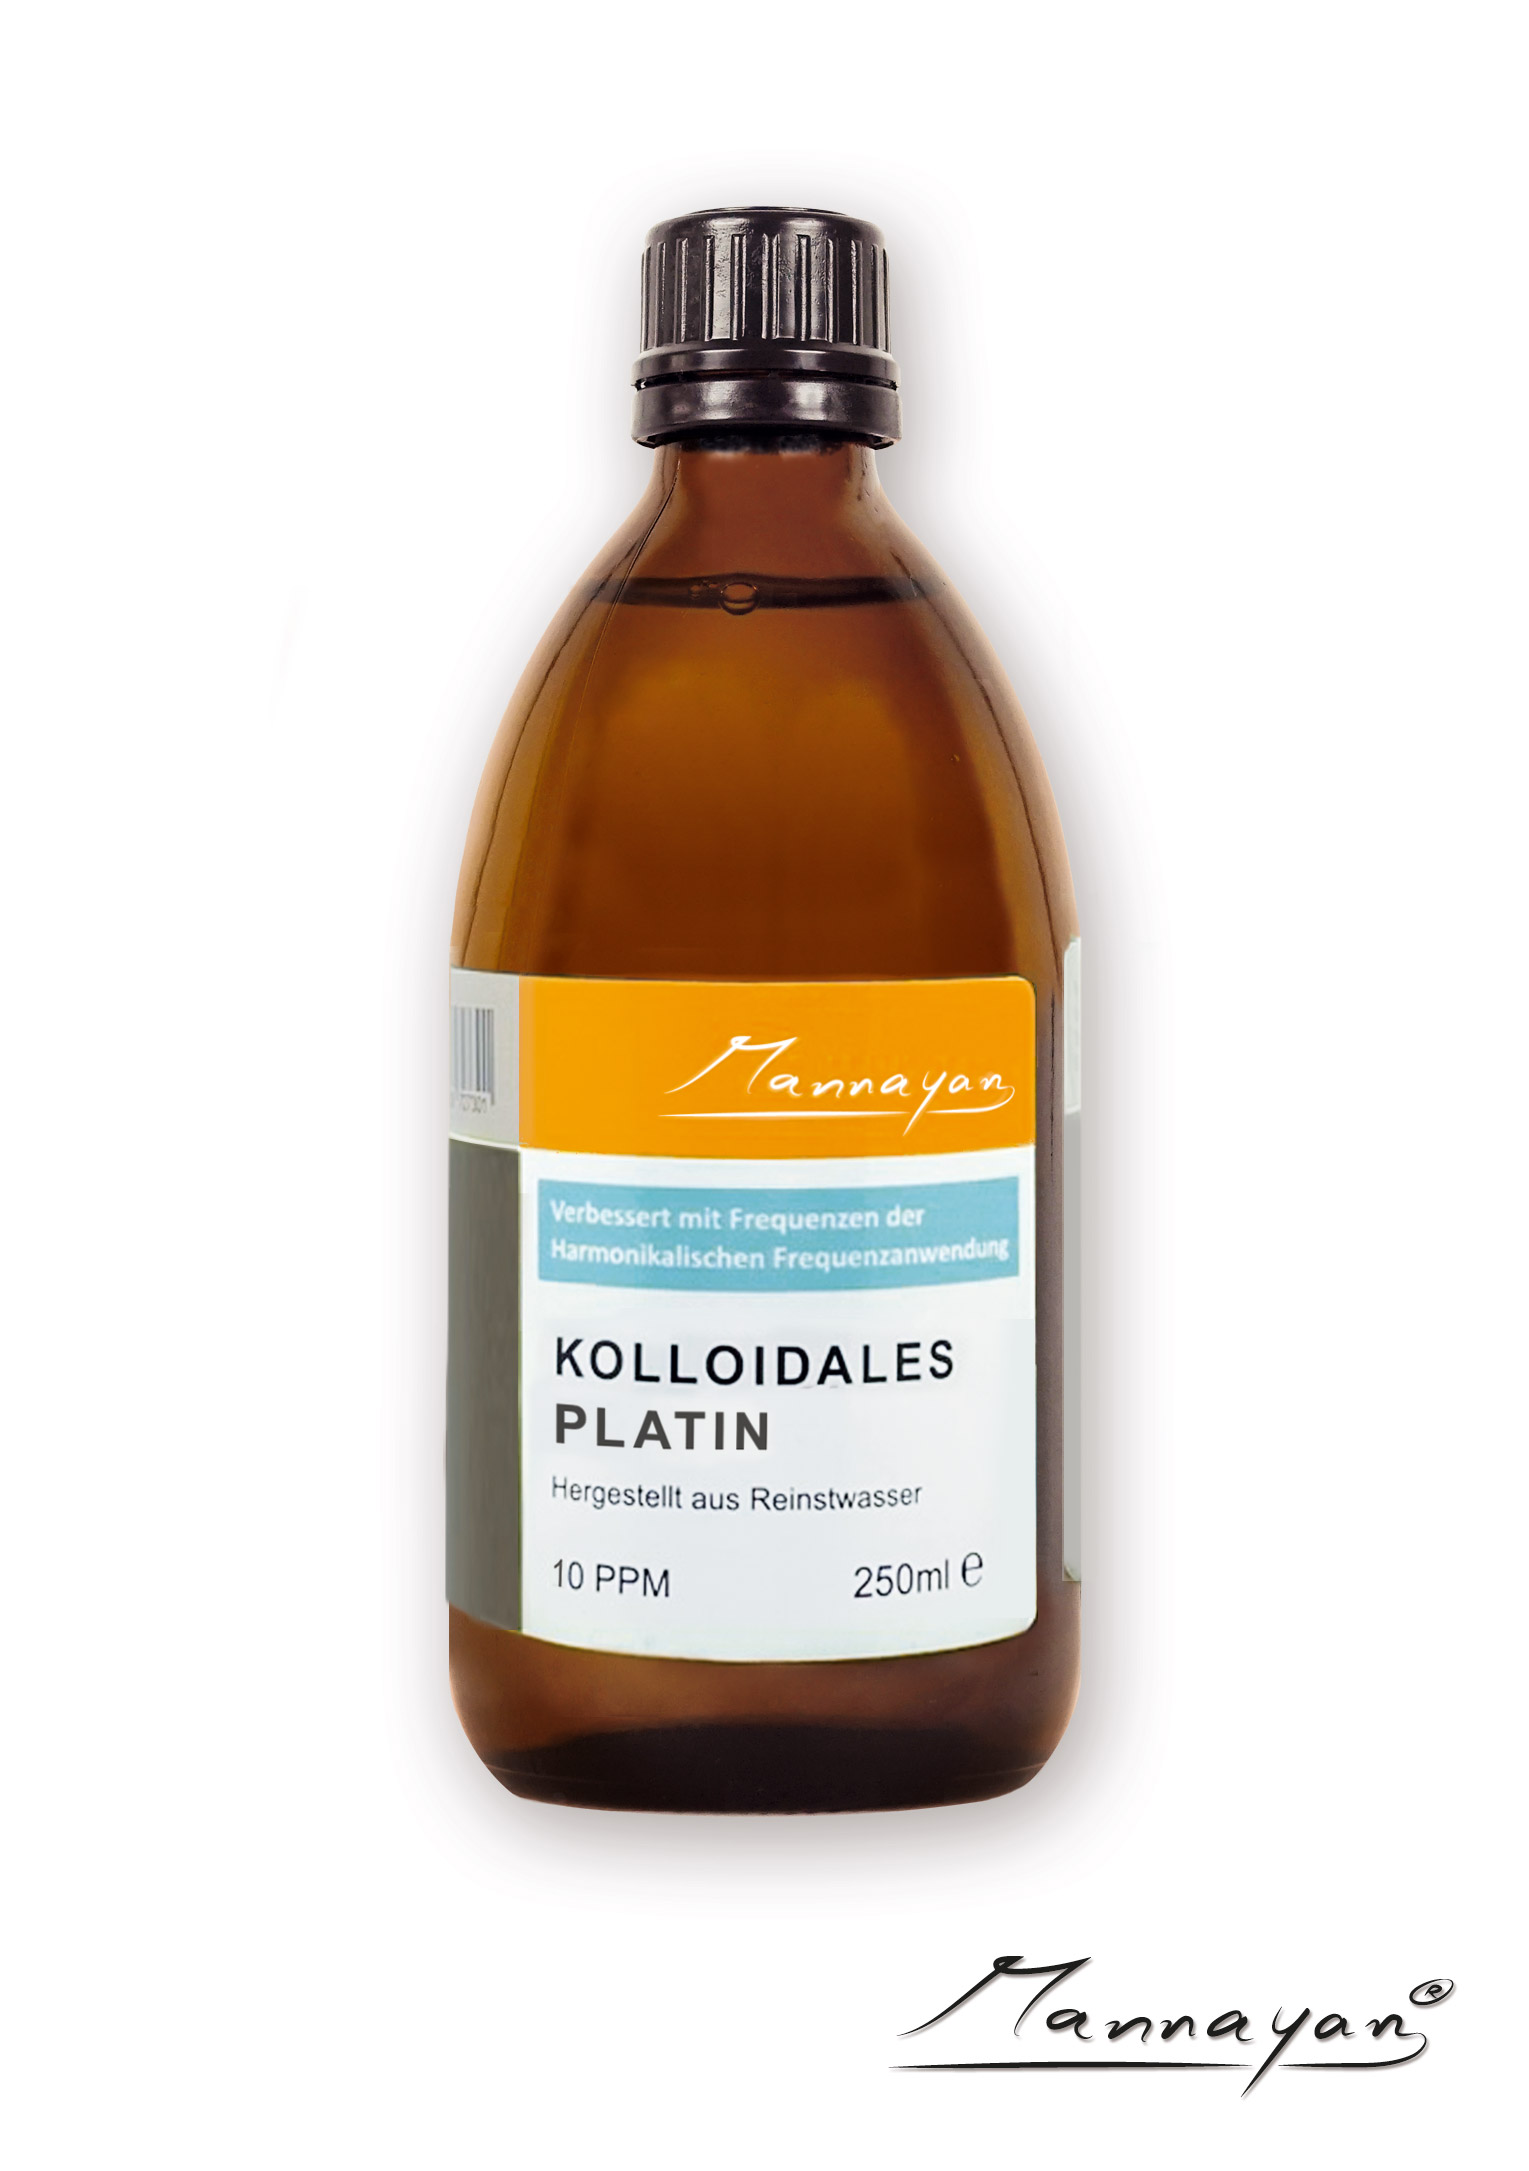 Mannayan Kolloidales Platin 10ppm (250 ml) 